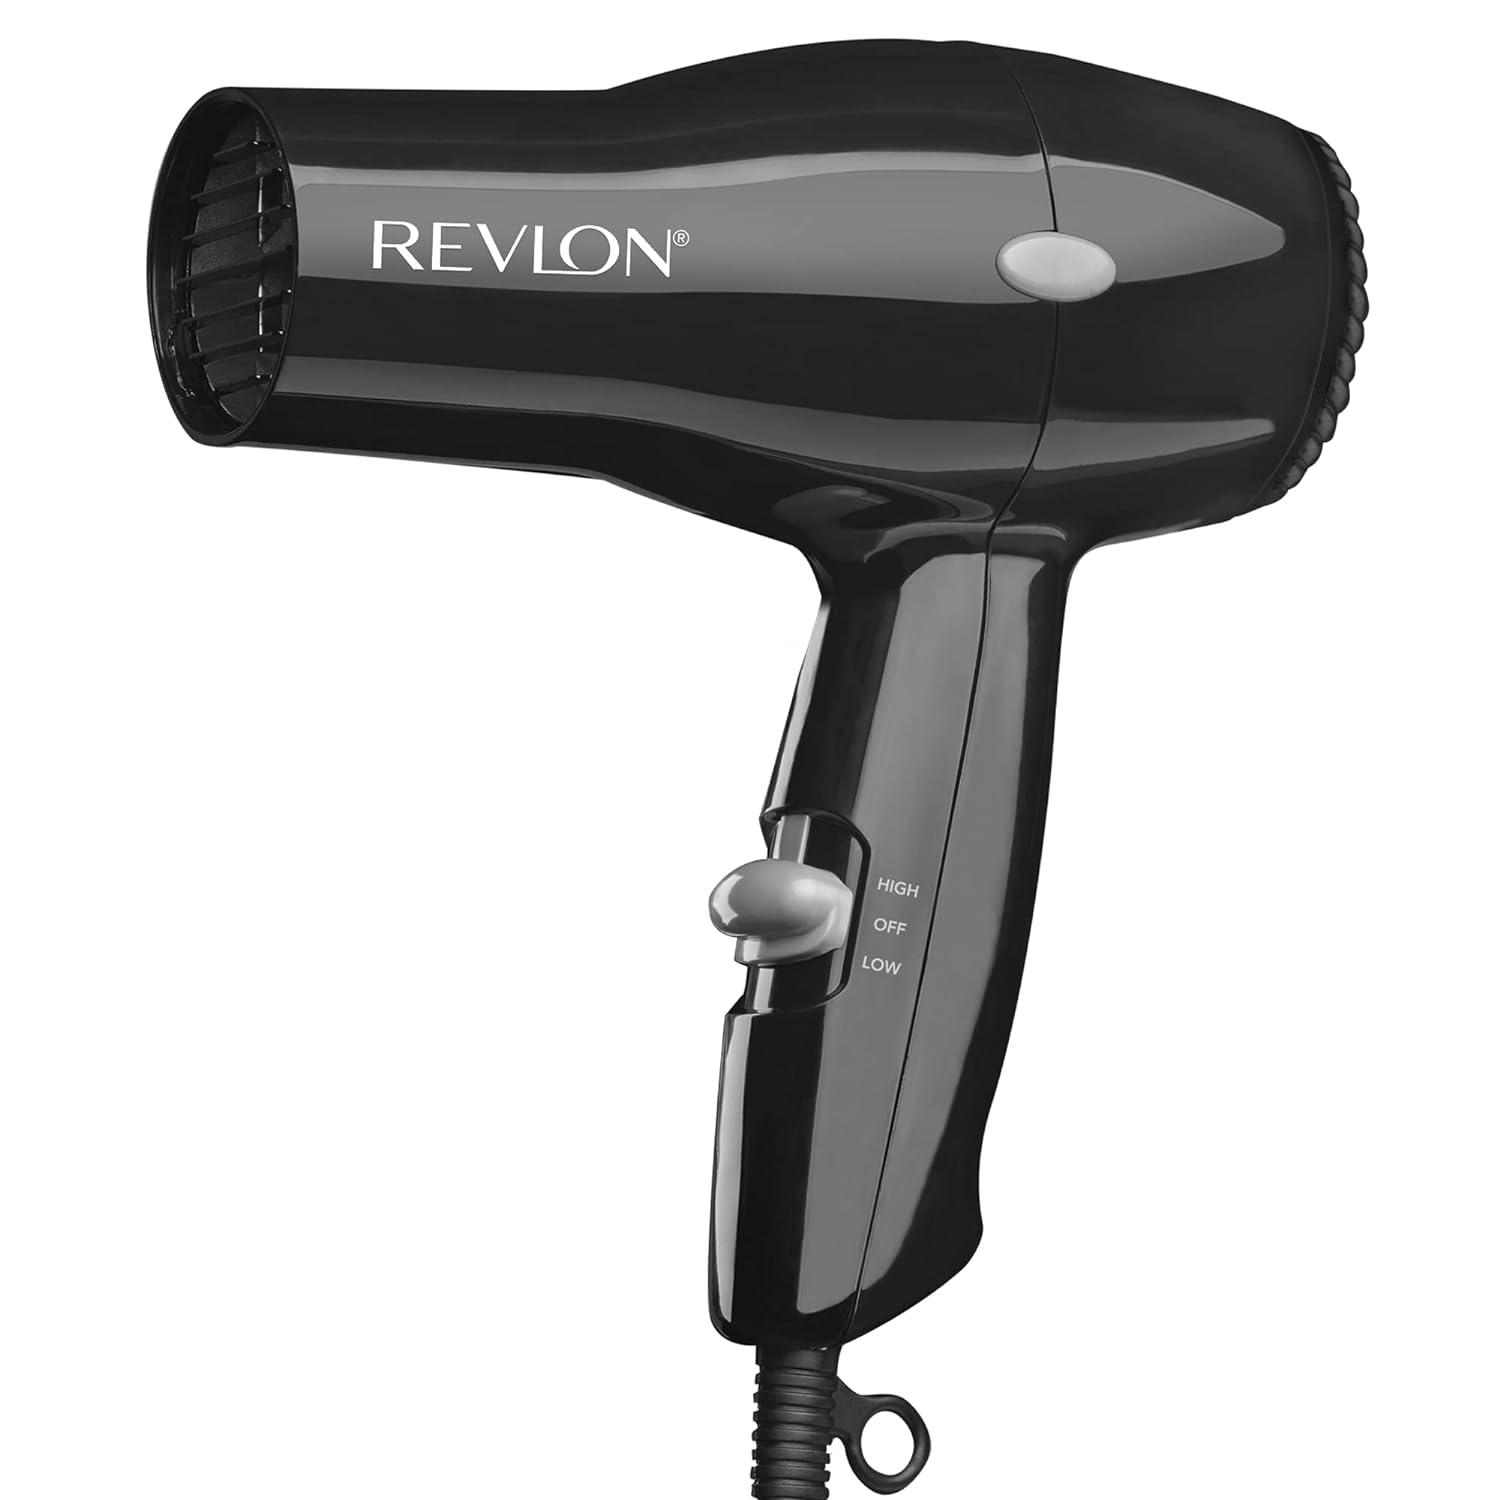 Revlon 1875W Compact Hair Dryer for $9.89